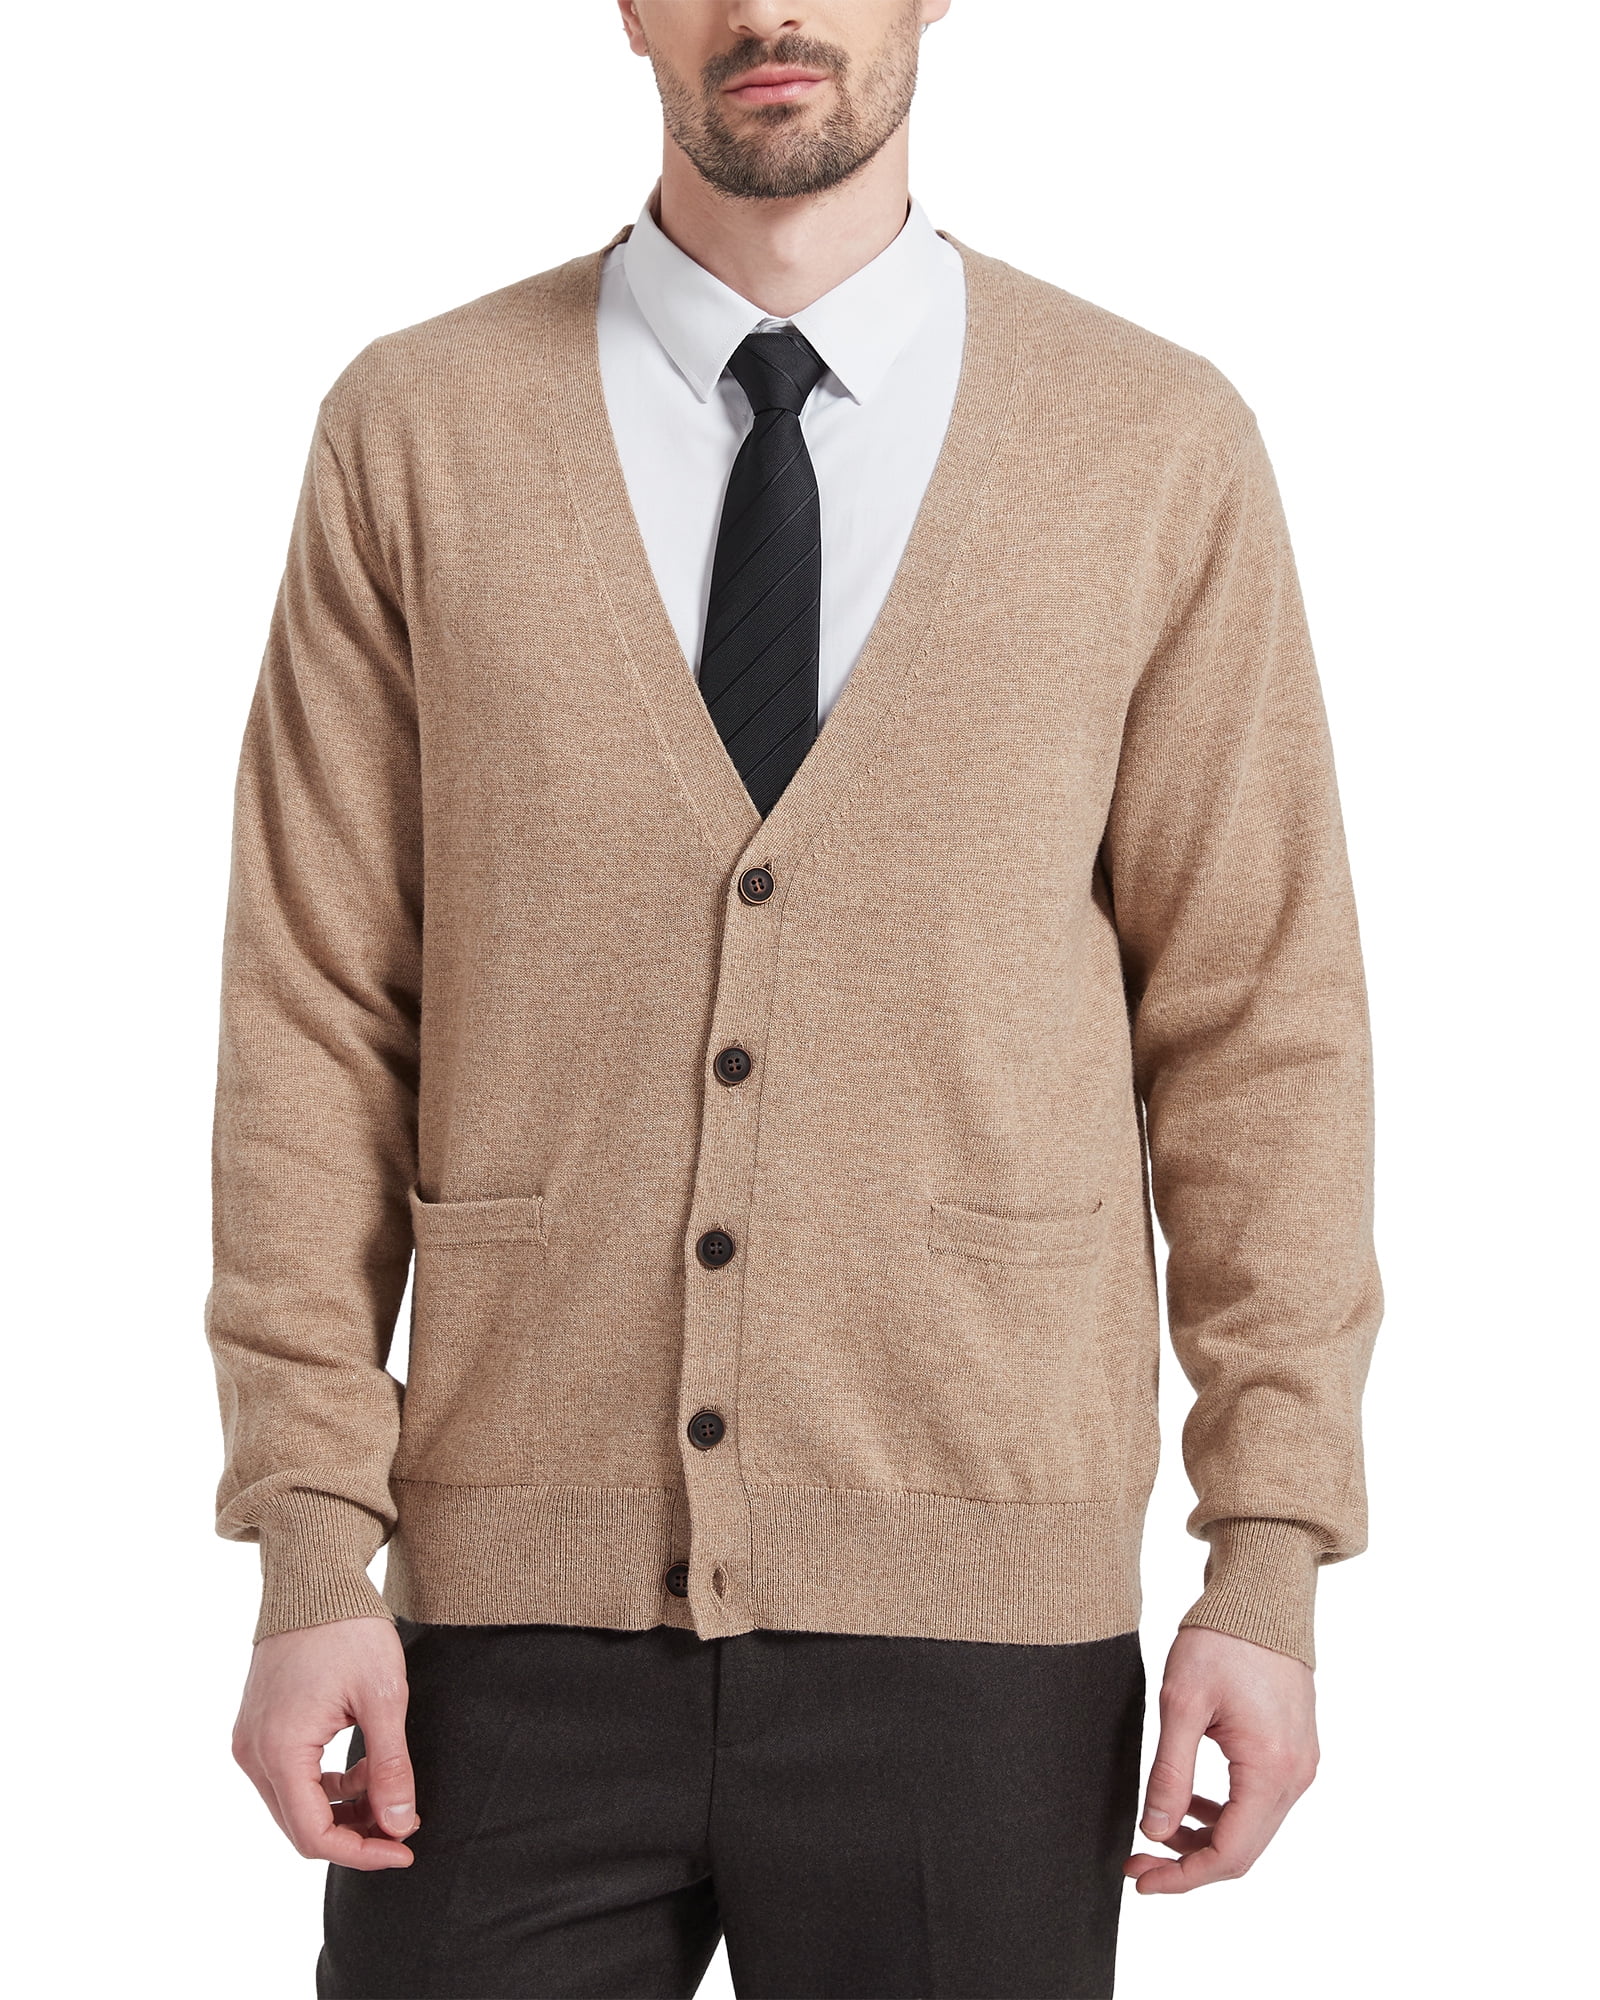 Kallspin Men\'s Cardigan Sweater Wool Blend V Neck Buttons Cardigan with  Pockets(Coffee,Medium)